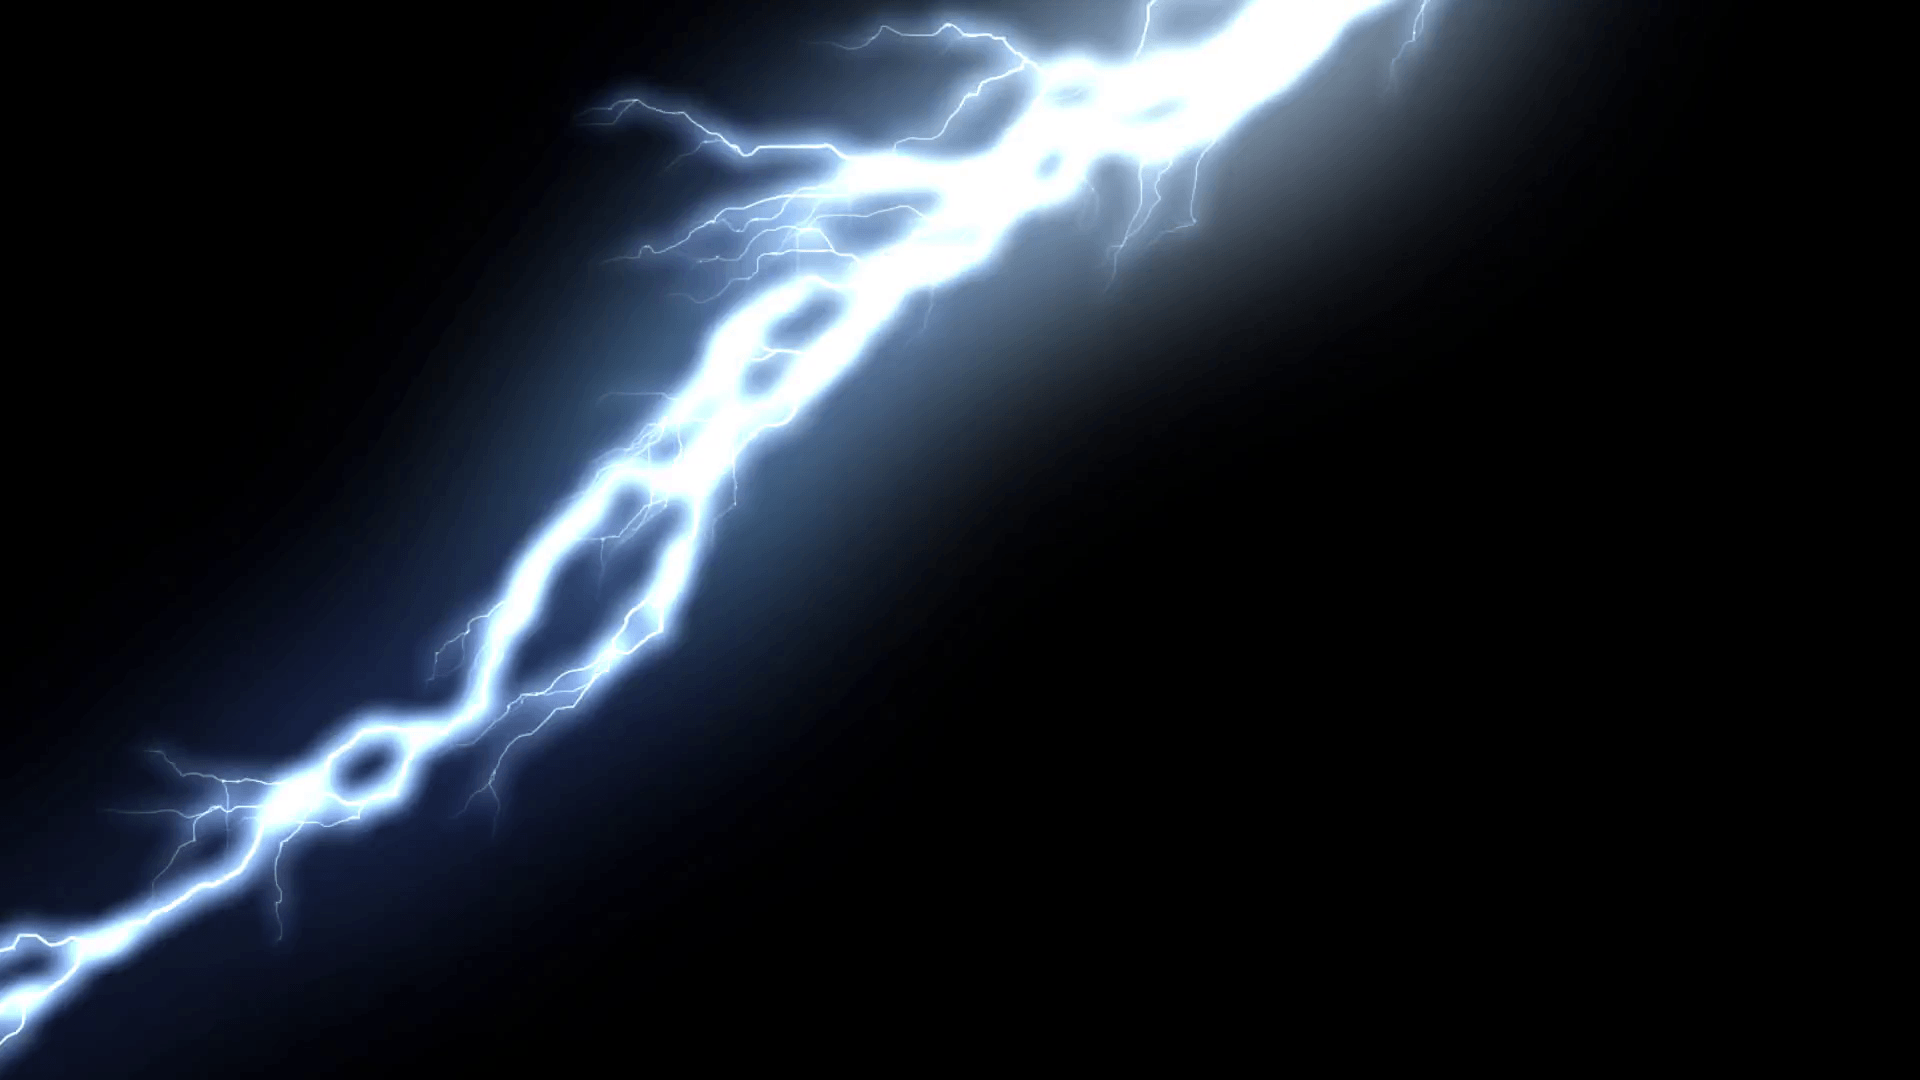 Realistic lightning strikes over black background. Thunderstorm